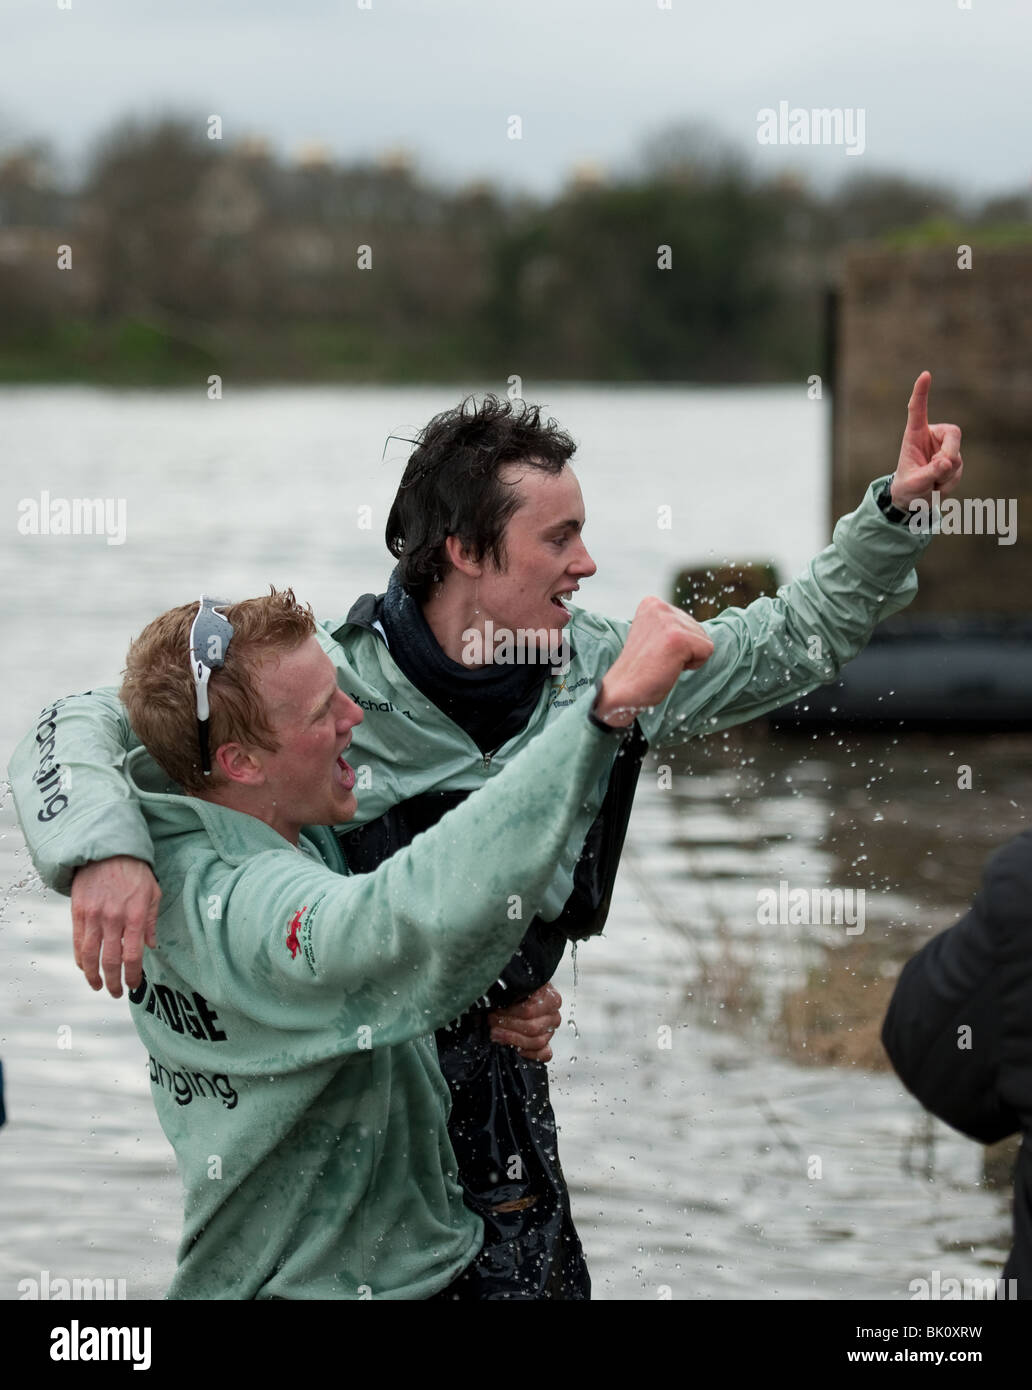 03/04/2010. The 156th Xchanging University Boat Race between Oxford University and Cambridge University Stock Photo